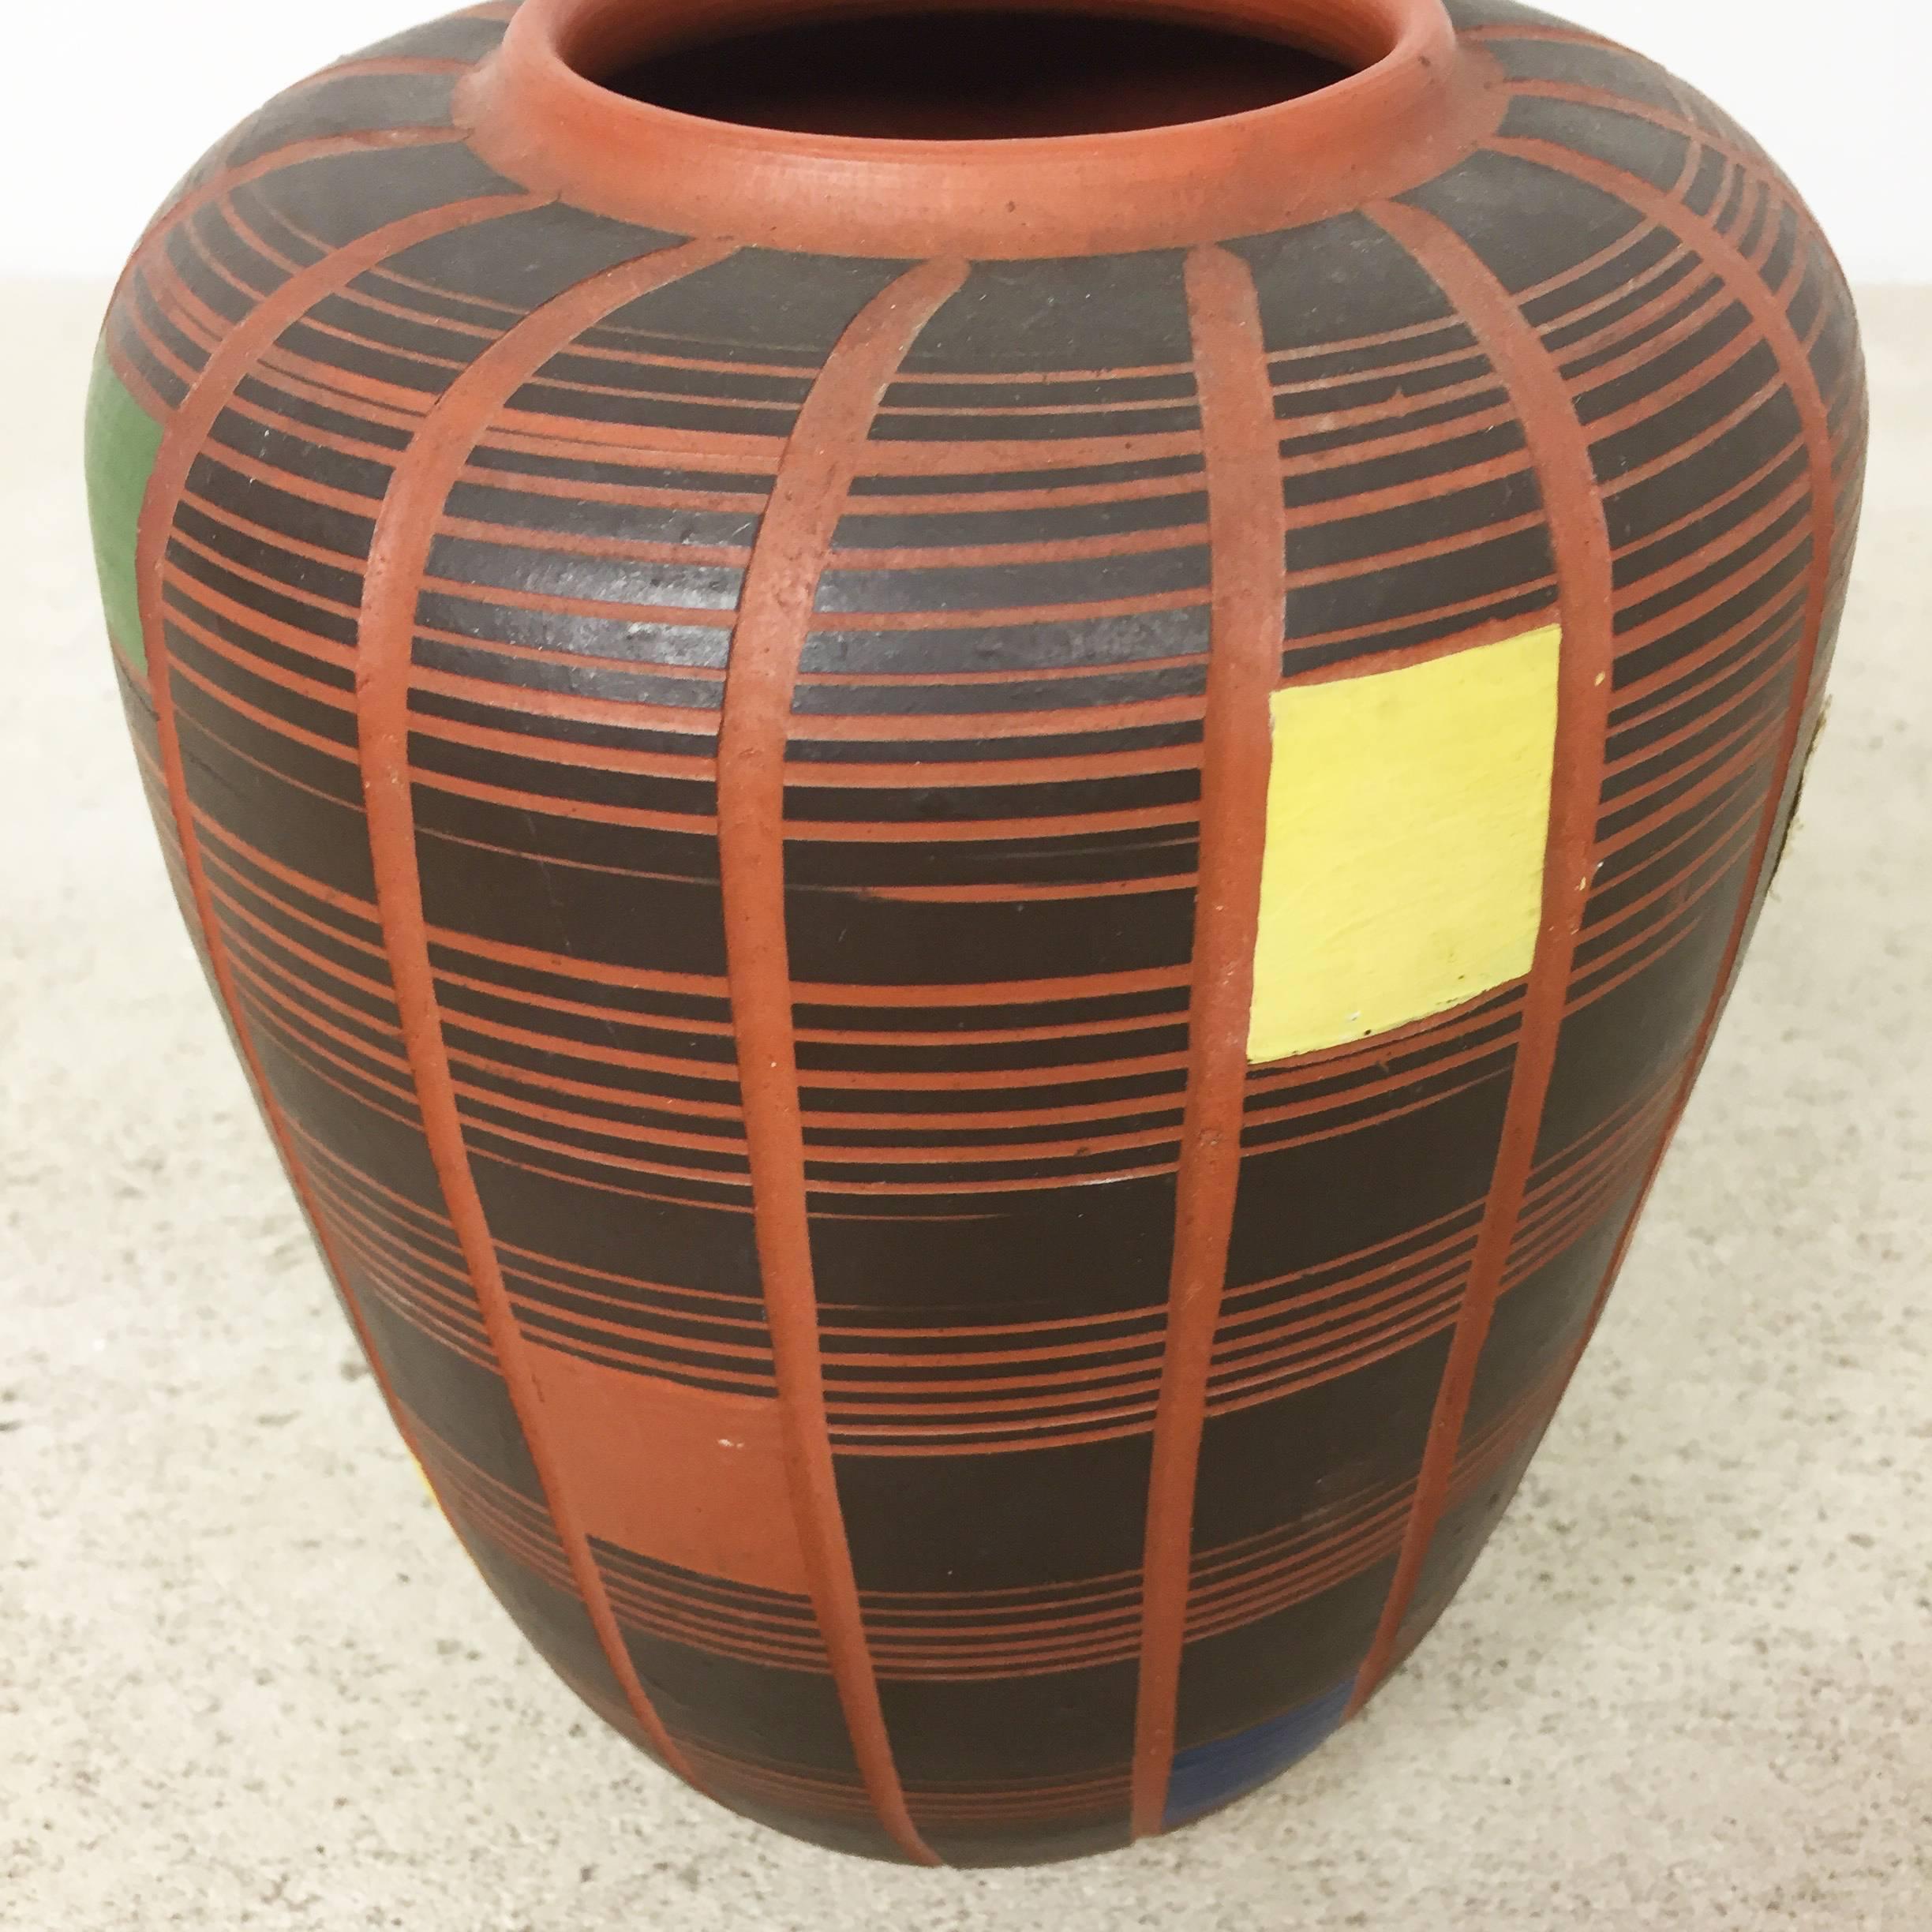 Vintage 1960s Cubic Ceramic Pottery Vase by Hükli Ceramic, Germany 1